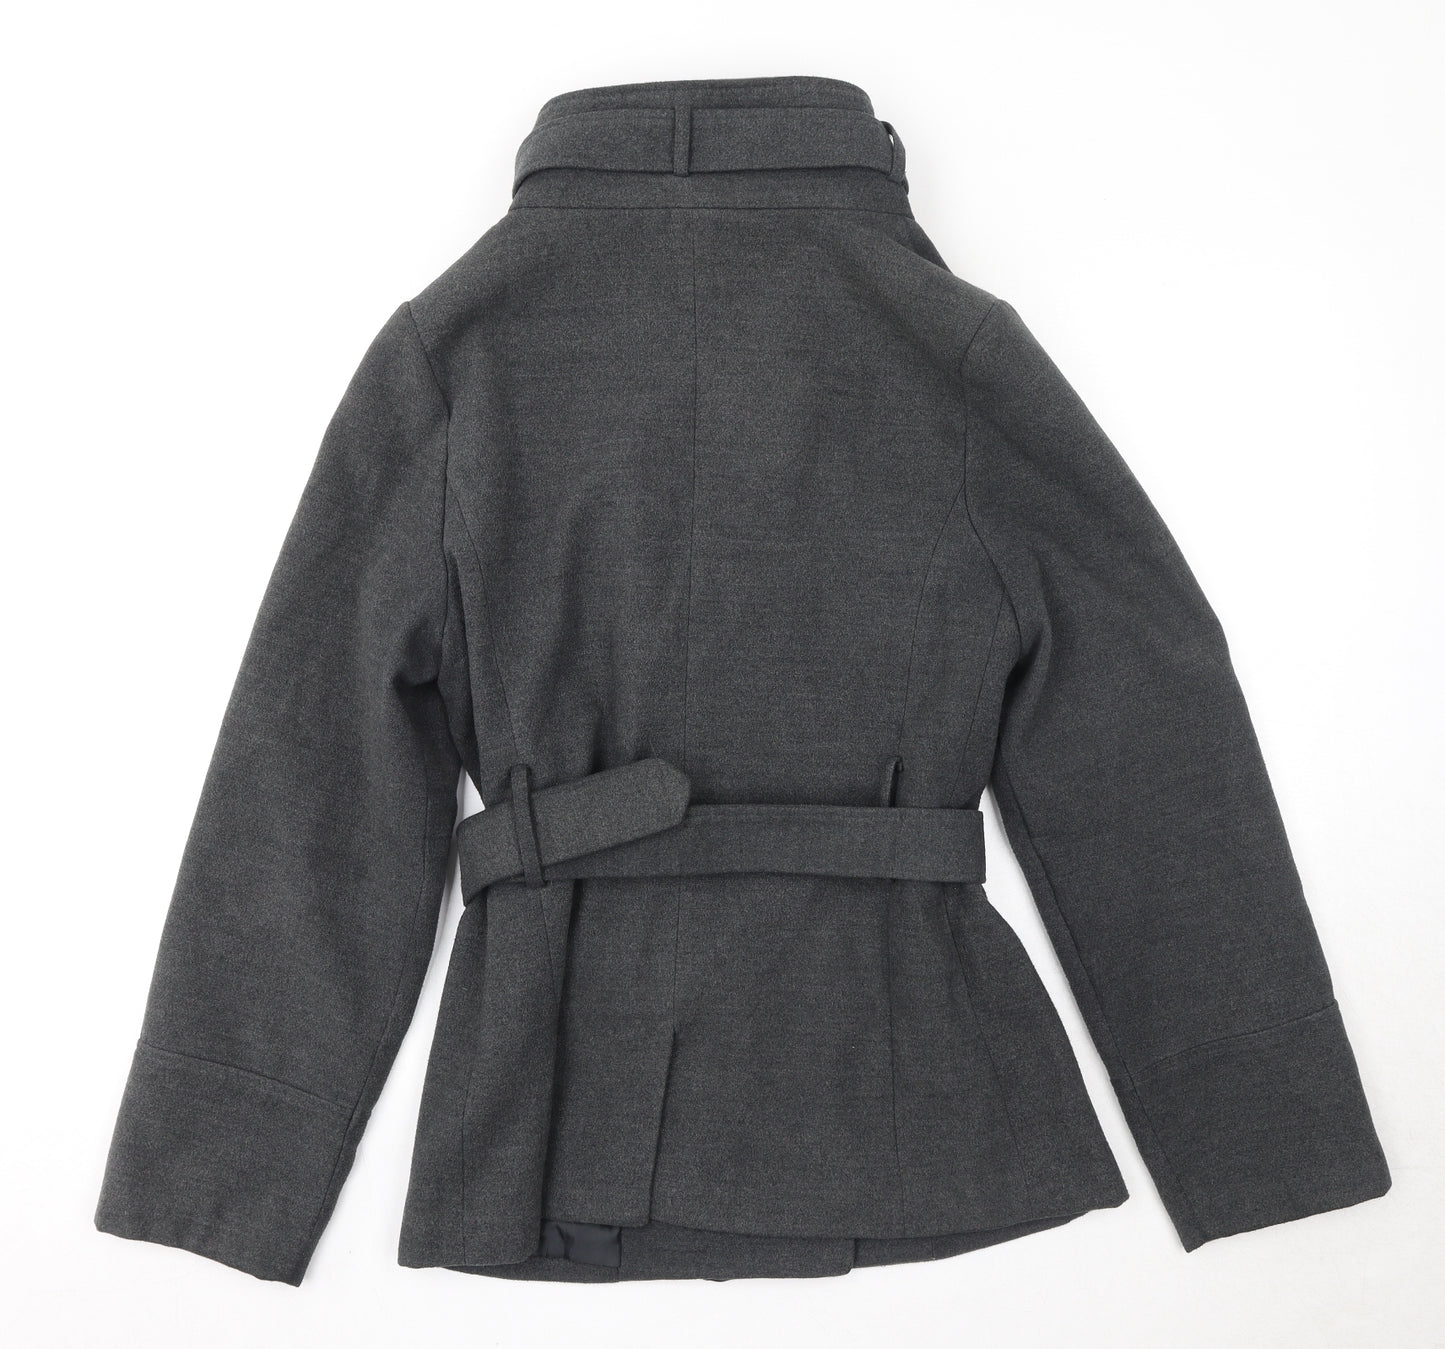 Pk Clothing Womens Grey Pea Coat Coat Size 16 Button